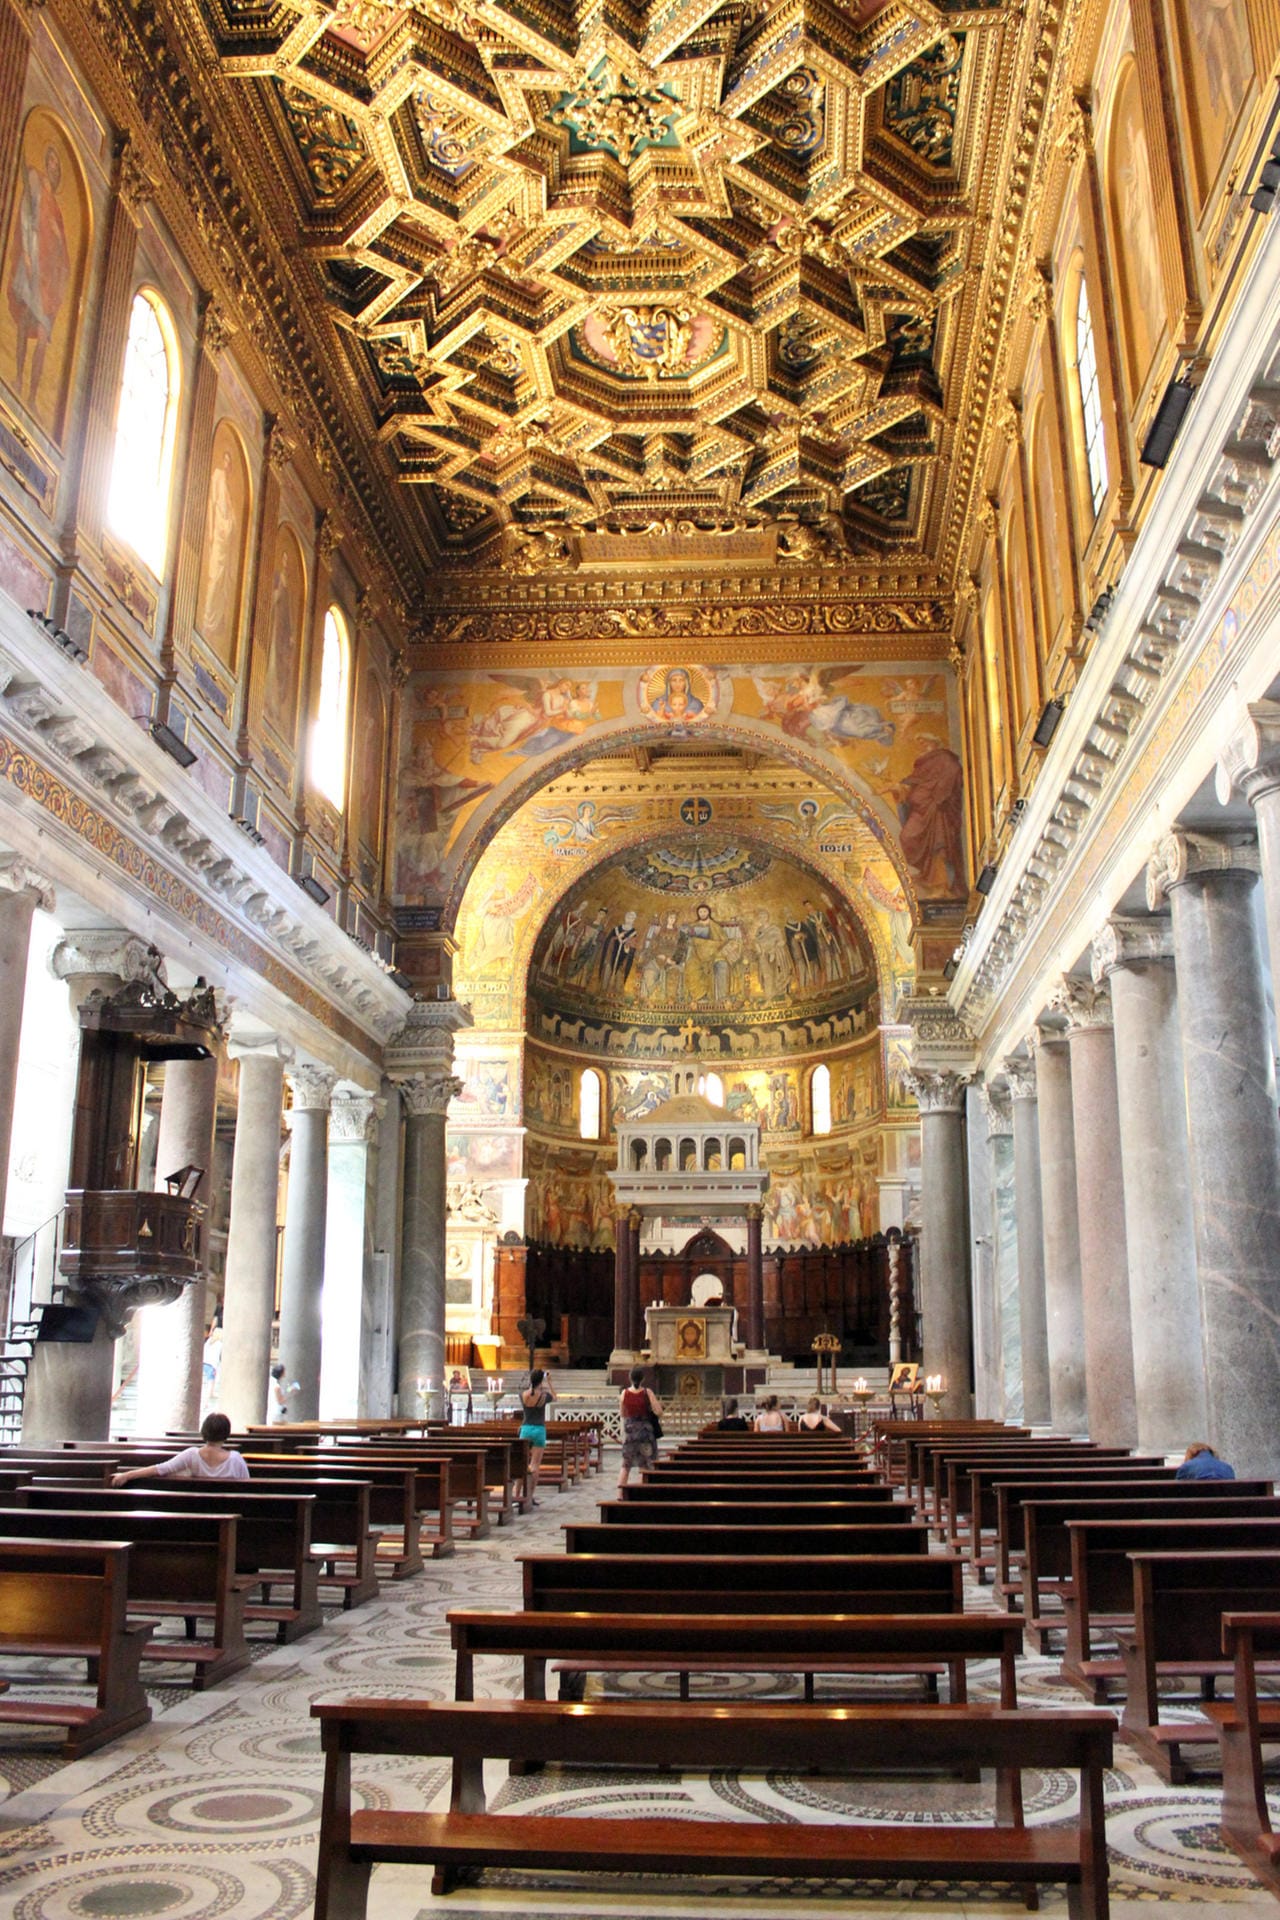 Blick ins Innere der Basilika Santa Maria in Trastevere, der ältesten Marienkirche Roms.